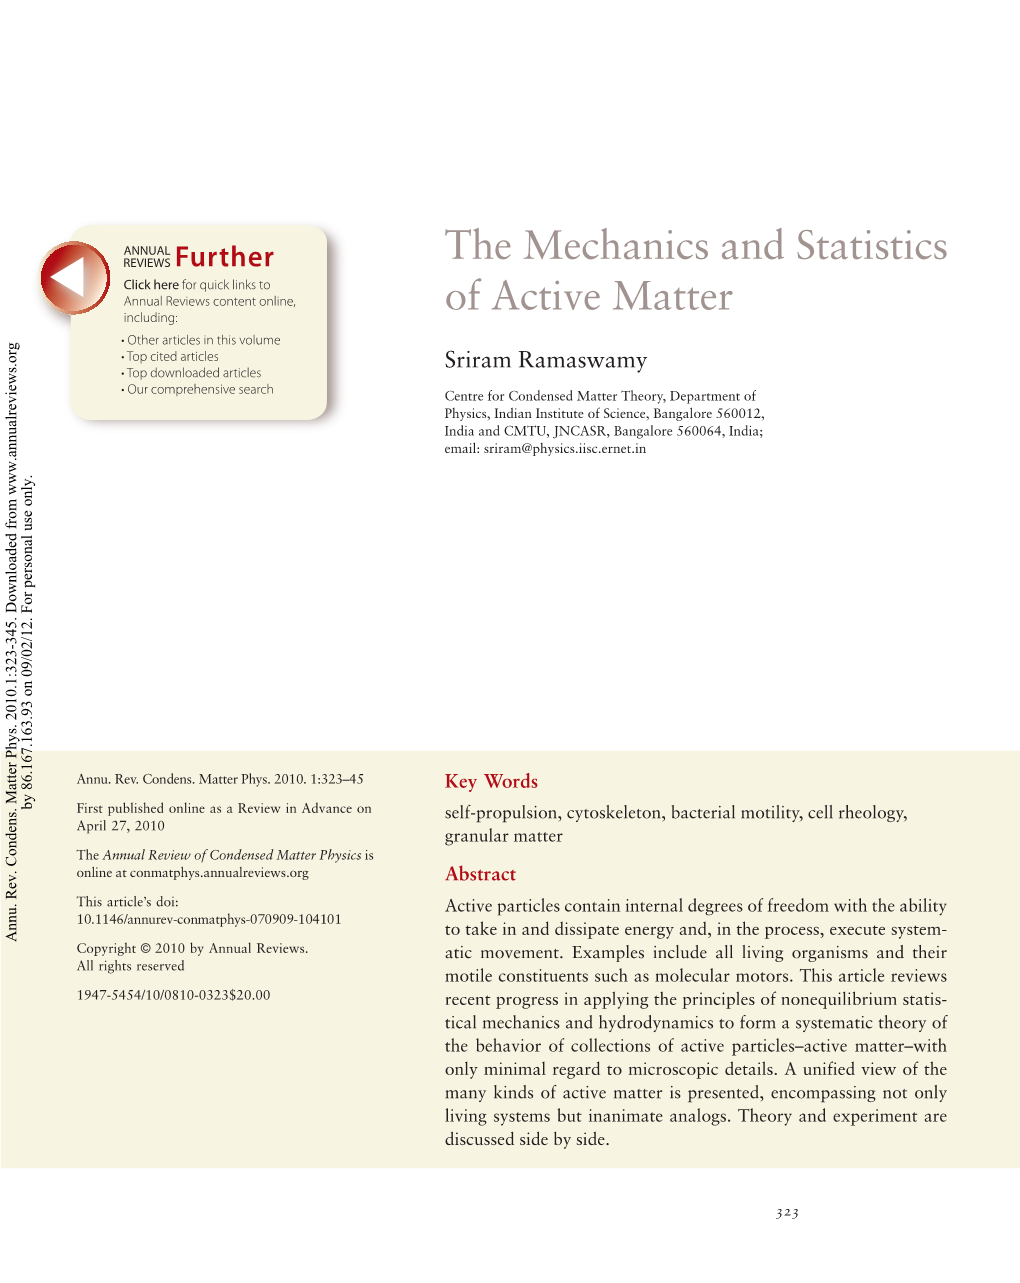 S. Ramaswamy, "The Mechanics and Statistics of Active Matter"